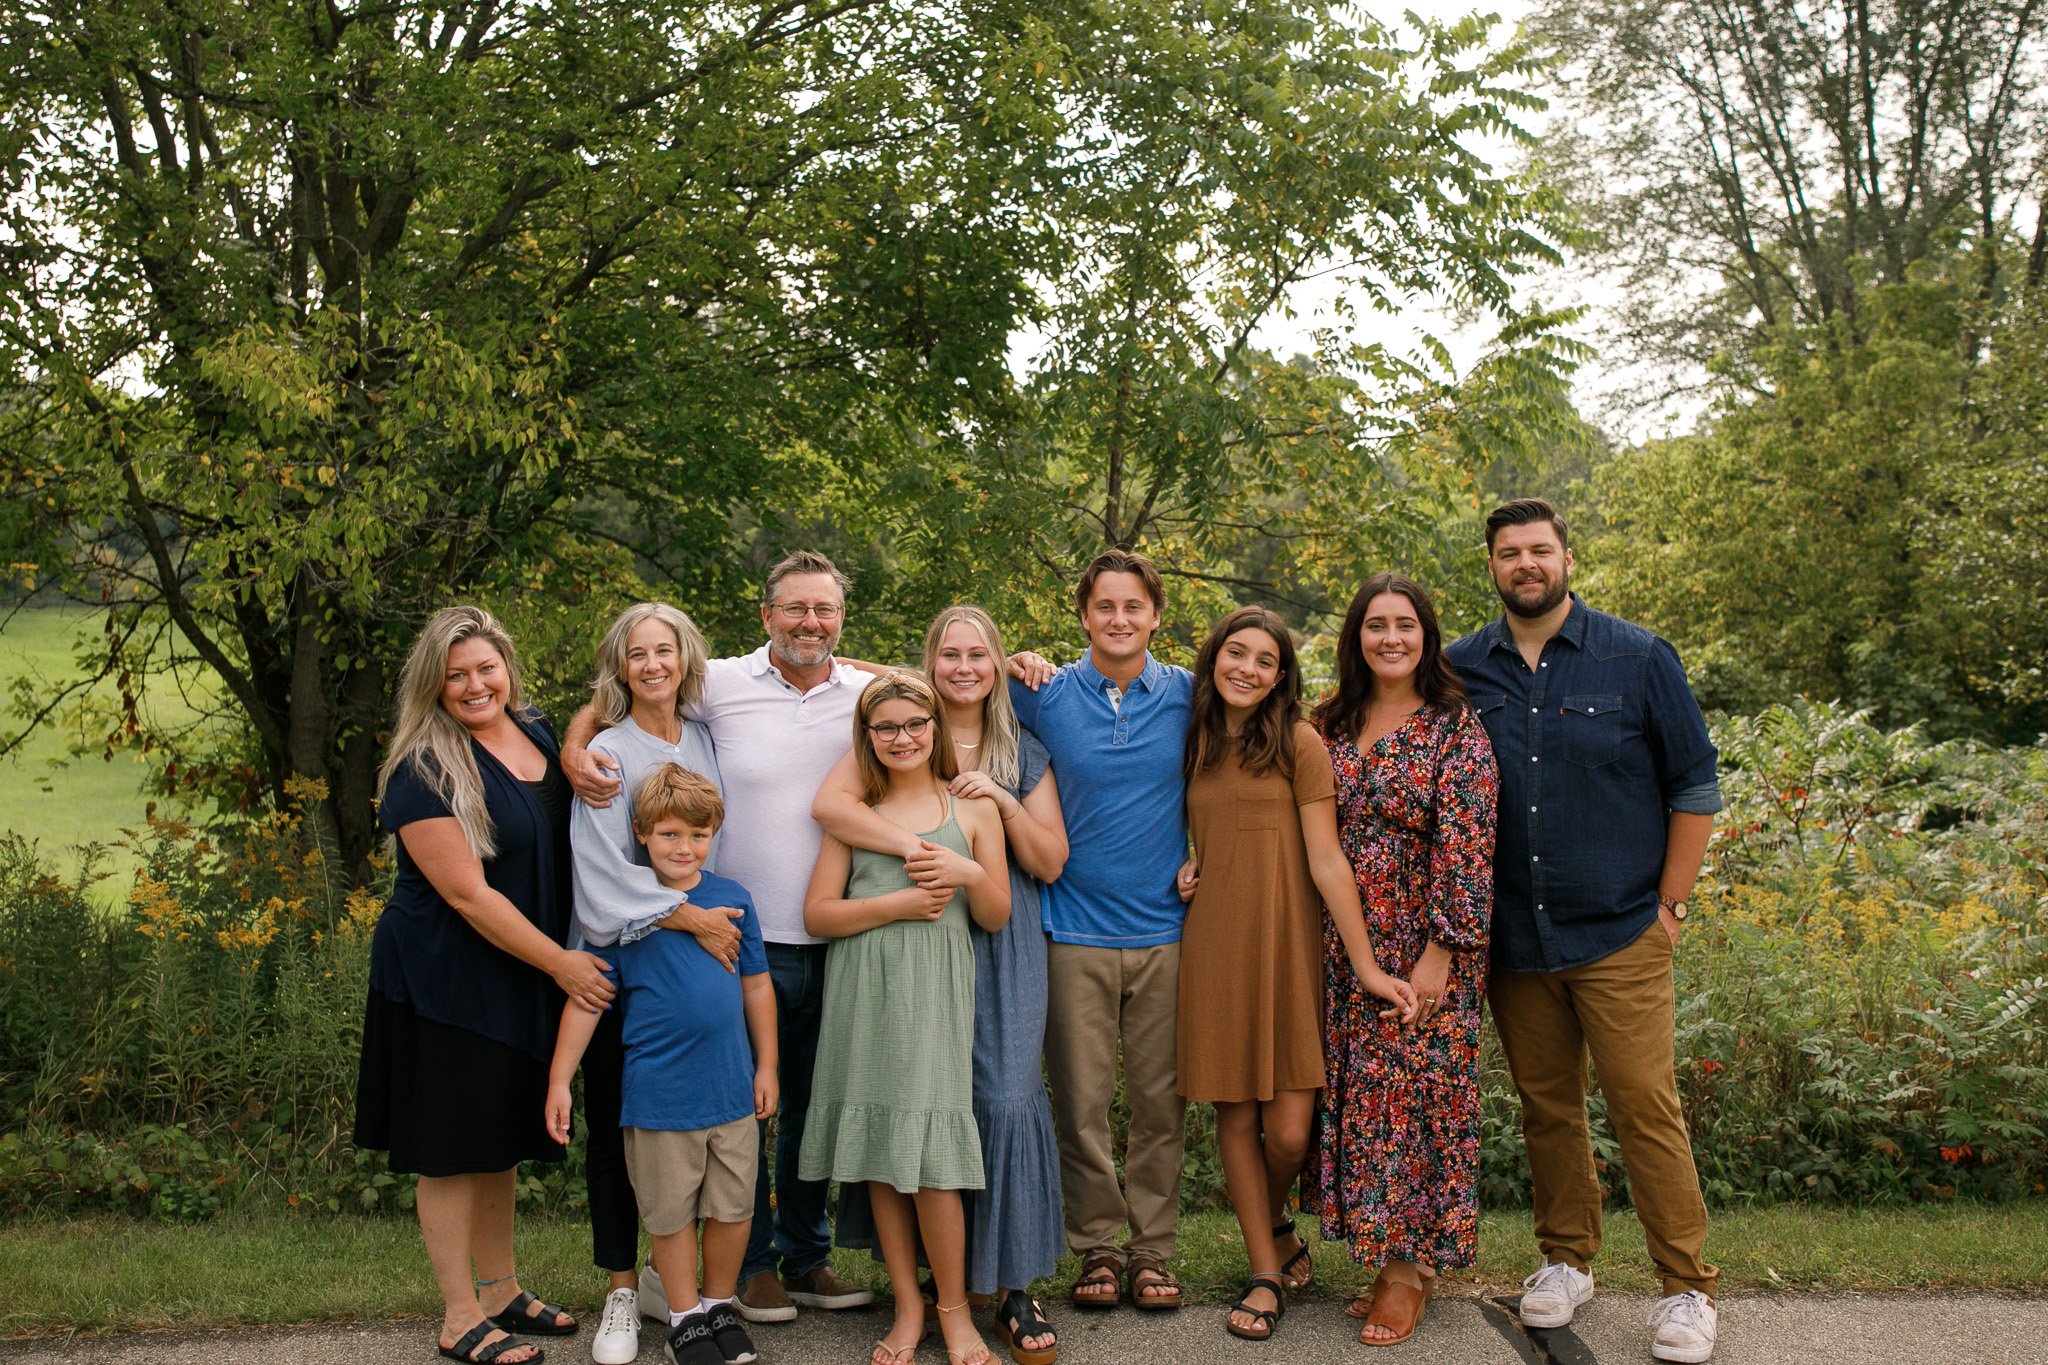 Baker Family Photos - Grand Rapids Family Photographer - Rockford Family Photographer - Ada Family Photographer - Extended Family Portraits - Jessica Darling - J Darling Photo052.jpg